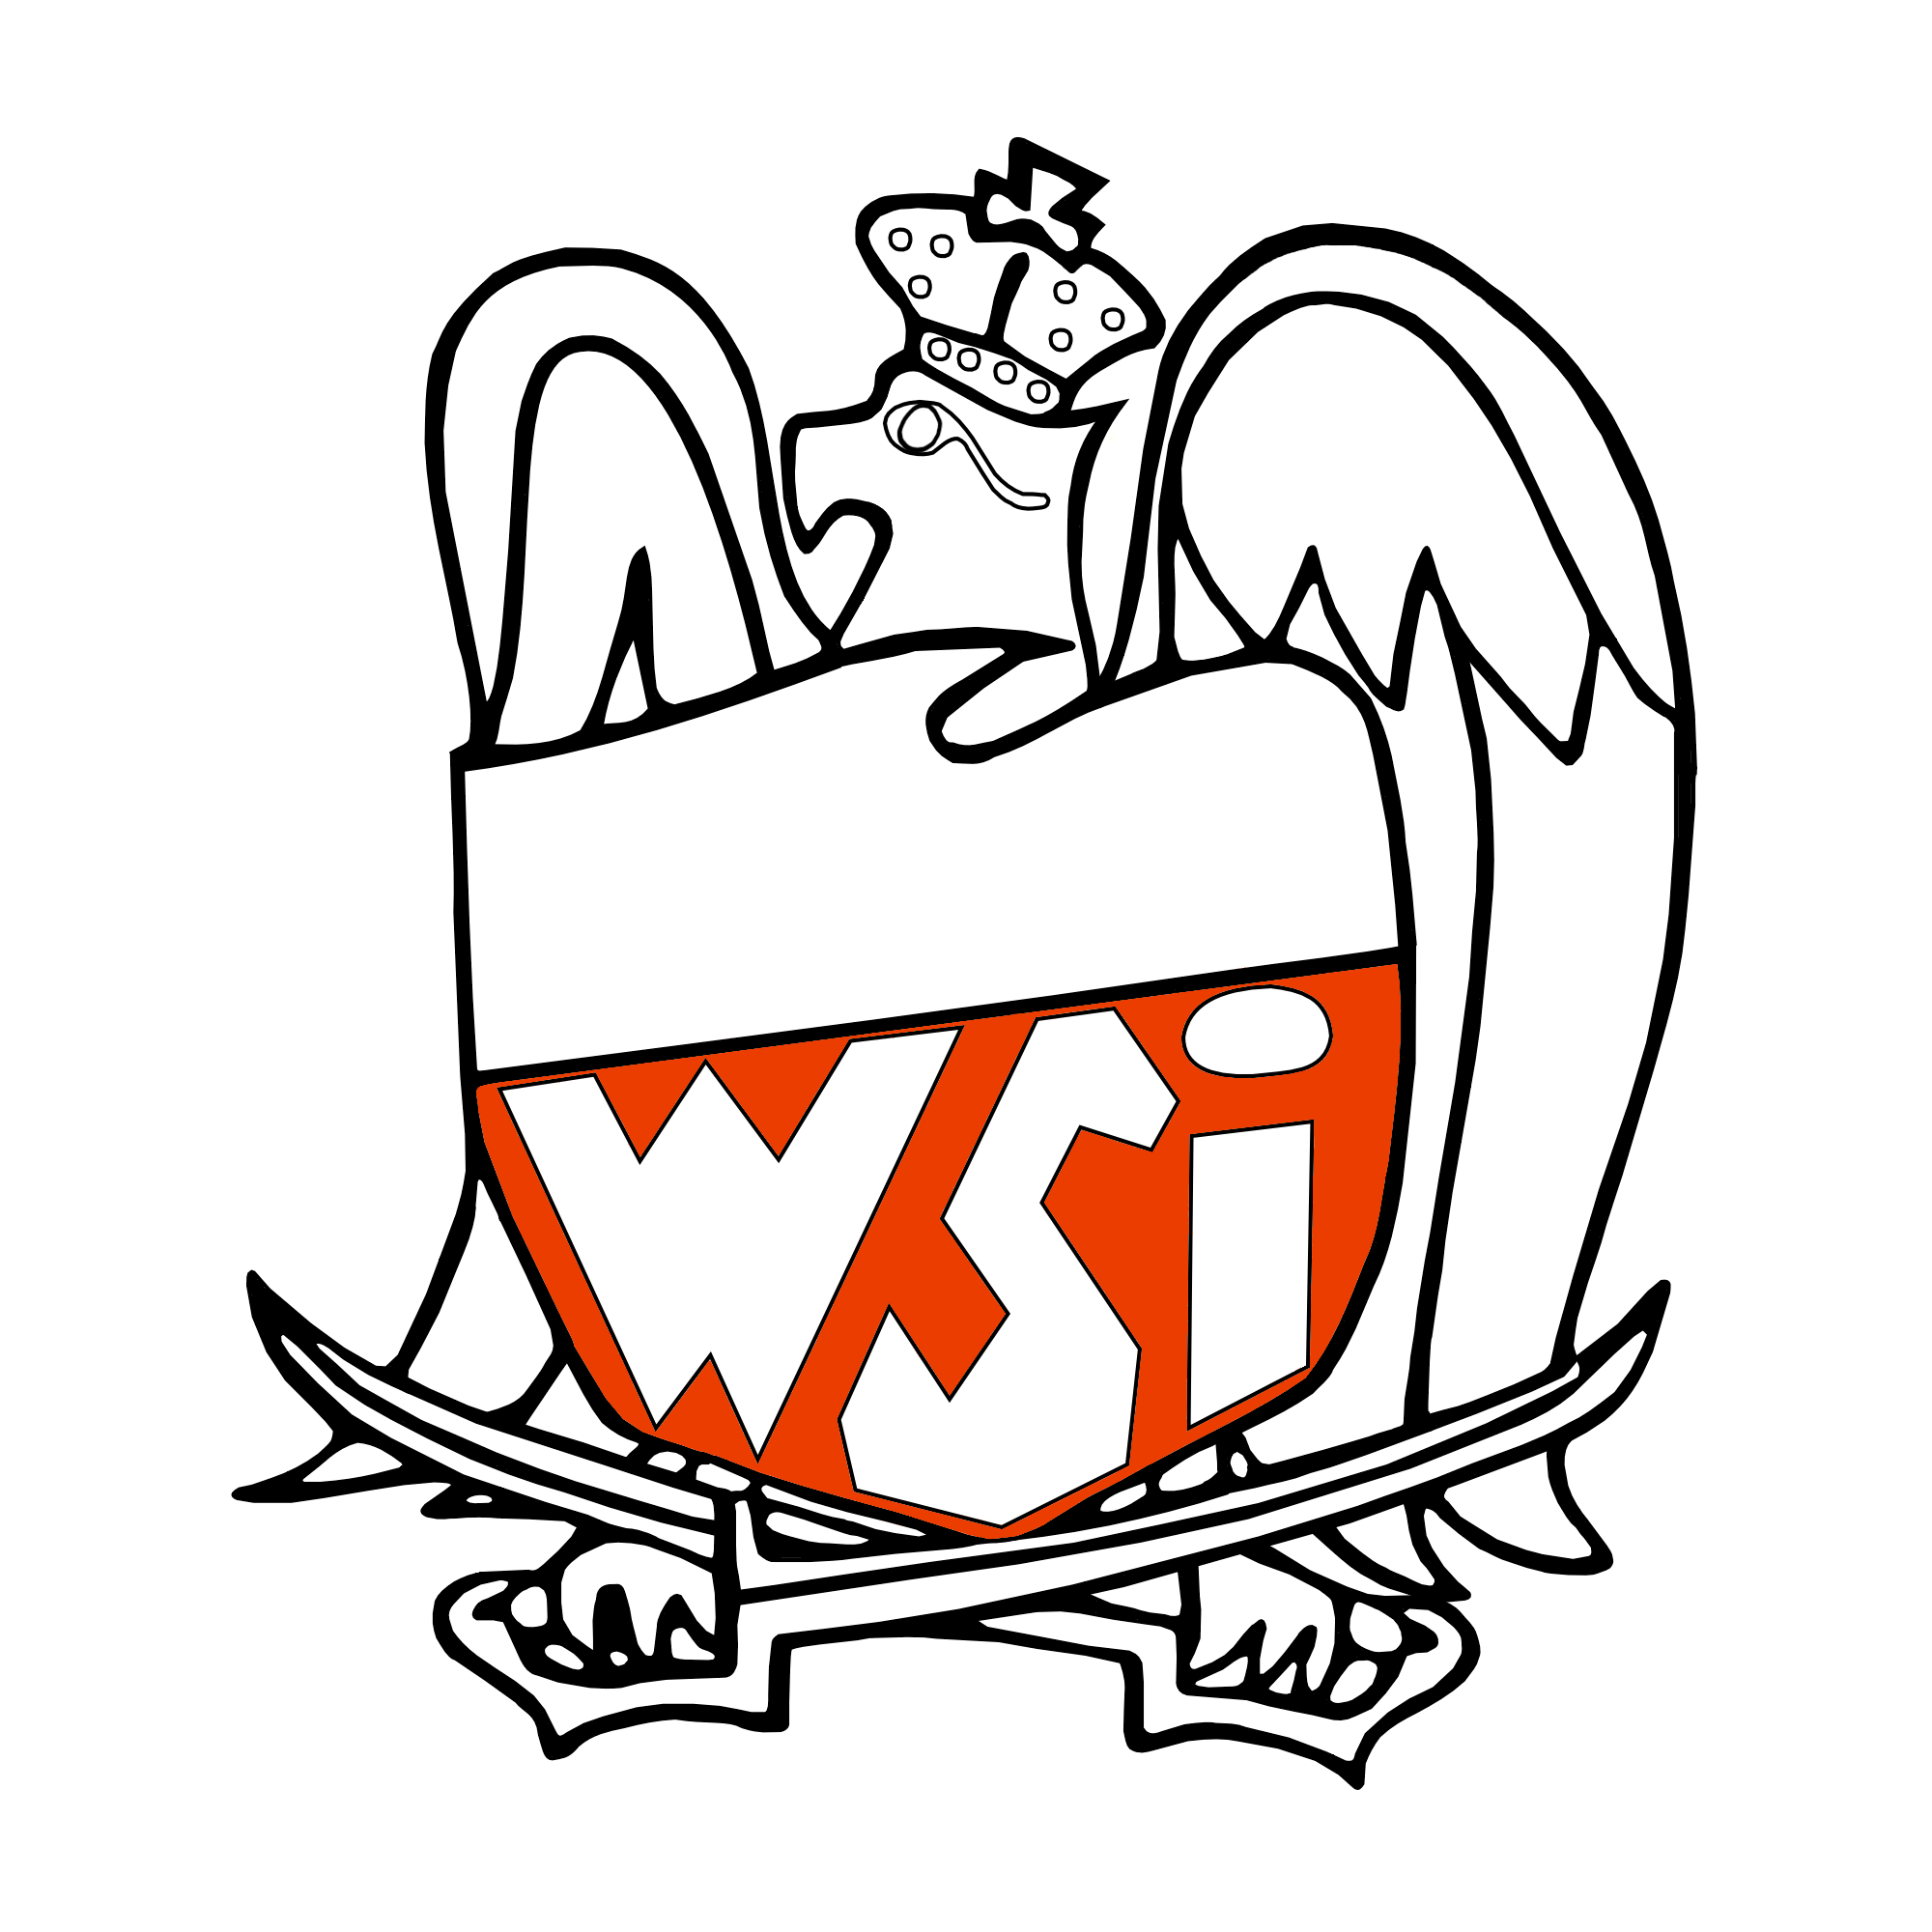 Image result for wsi logo